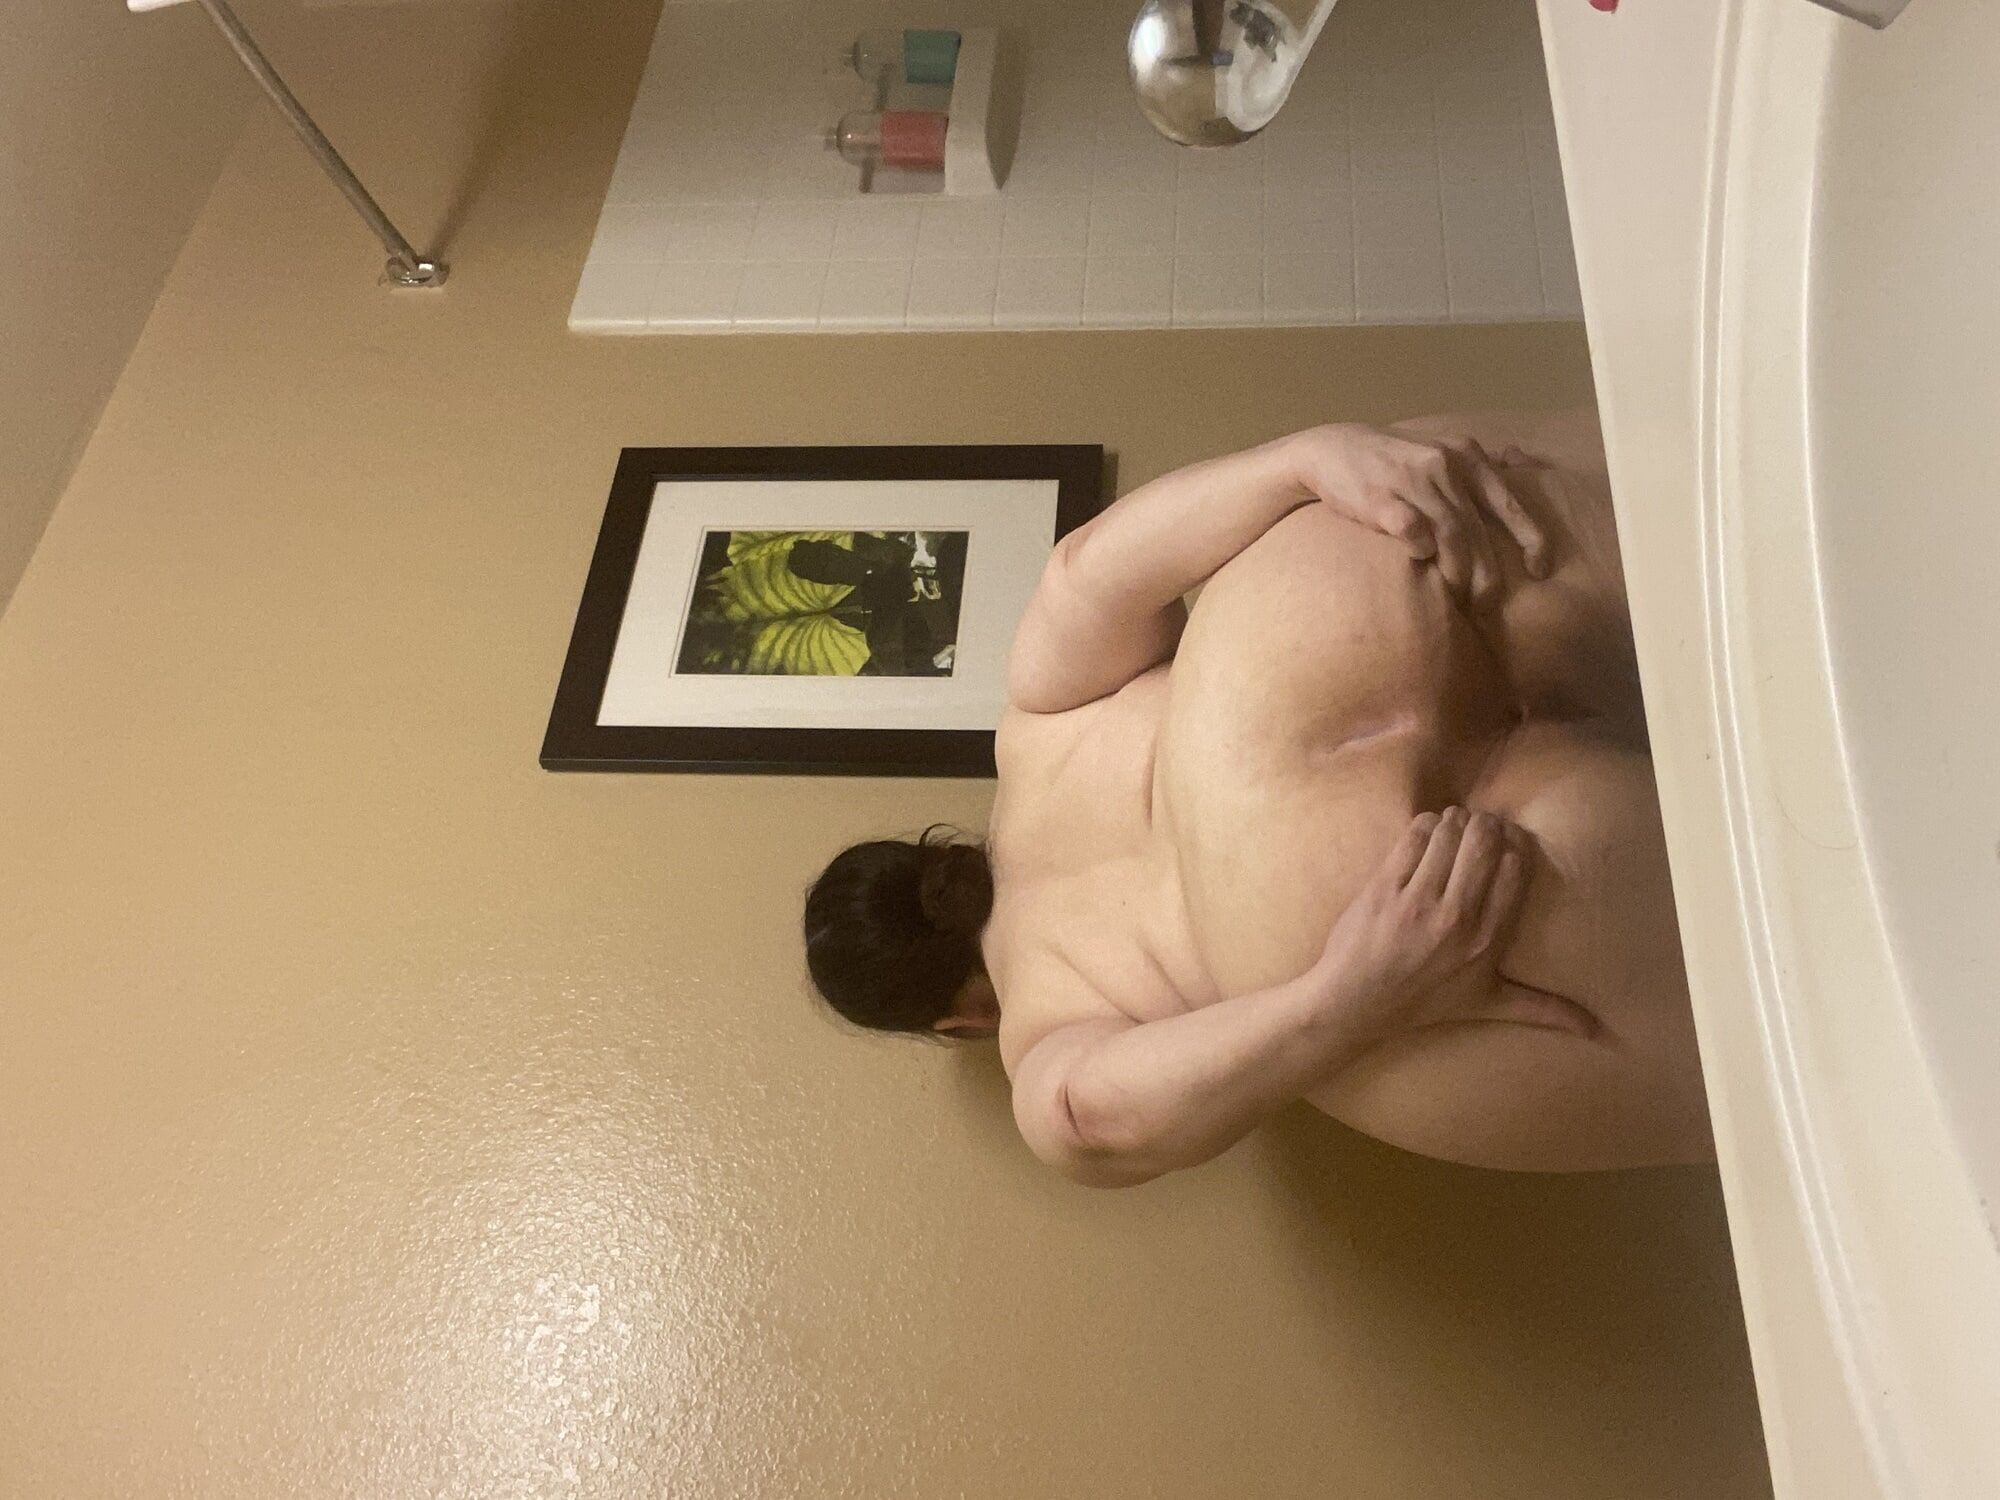 Quick pics in the hotel Bathroom #5